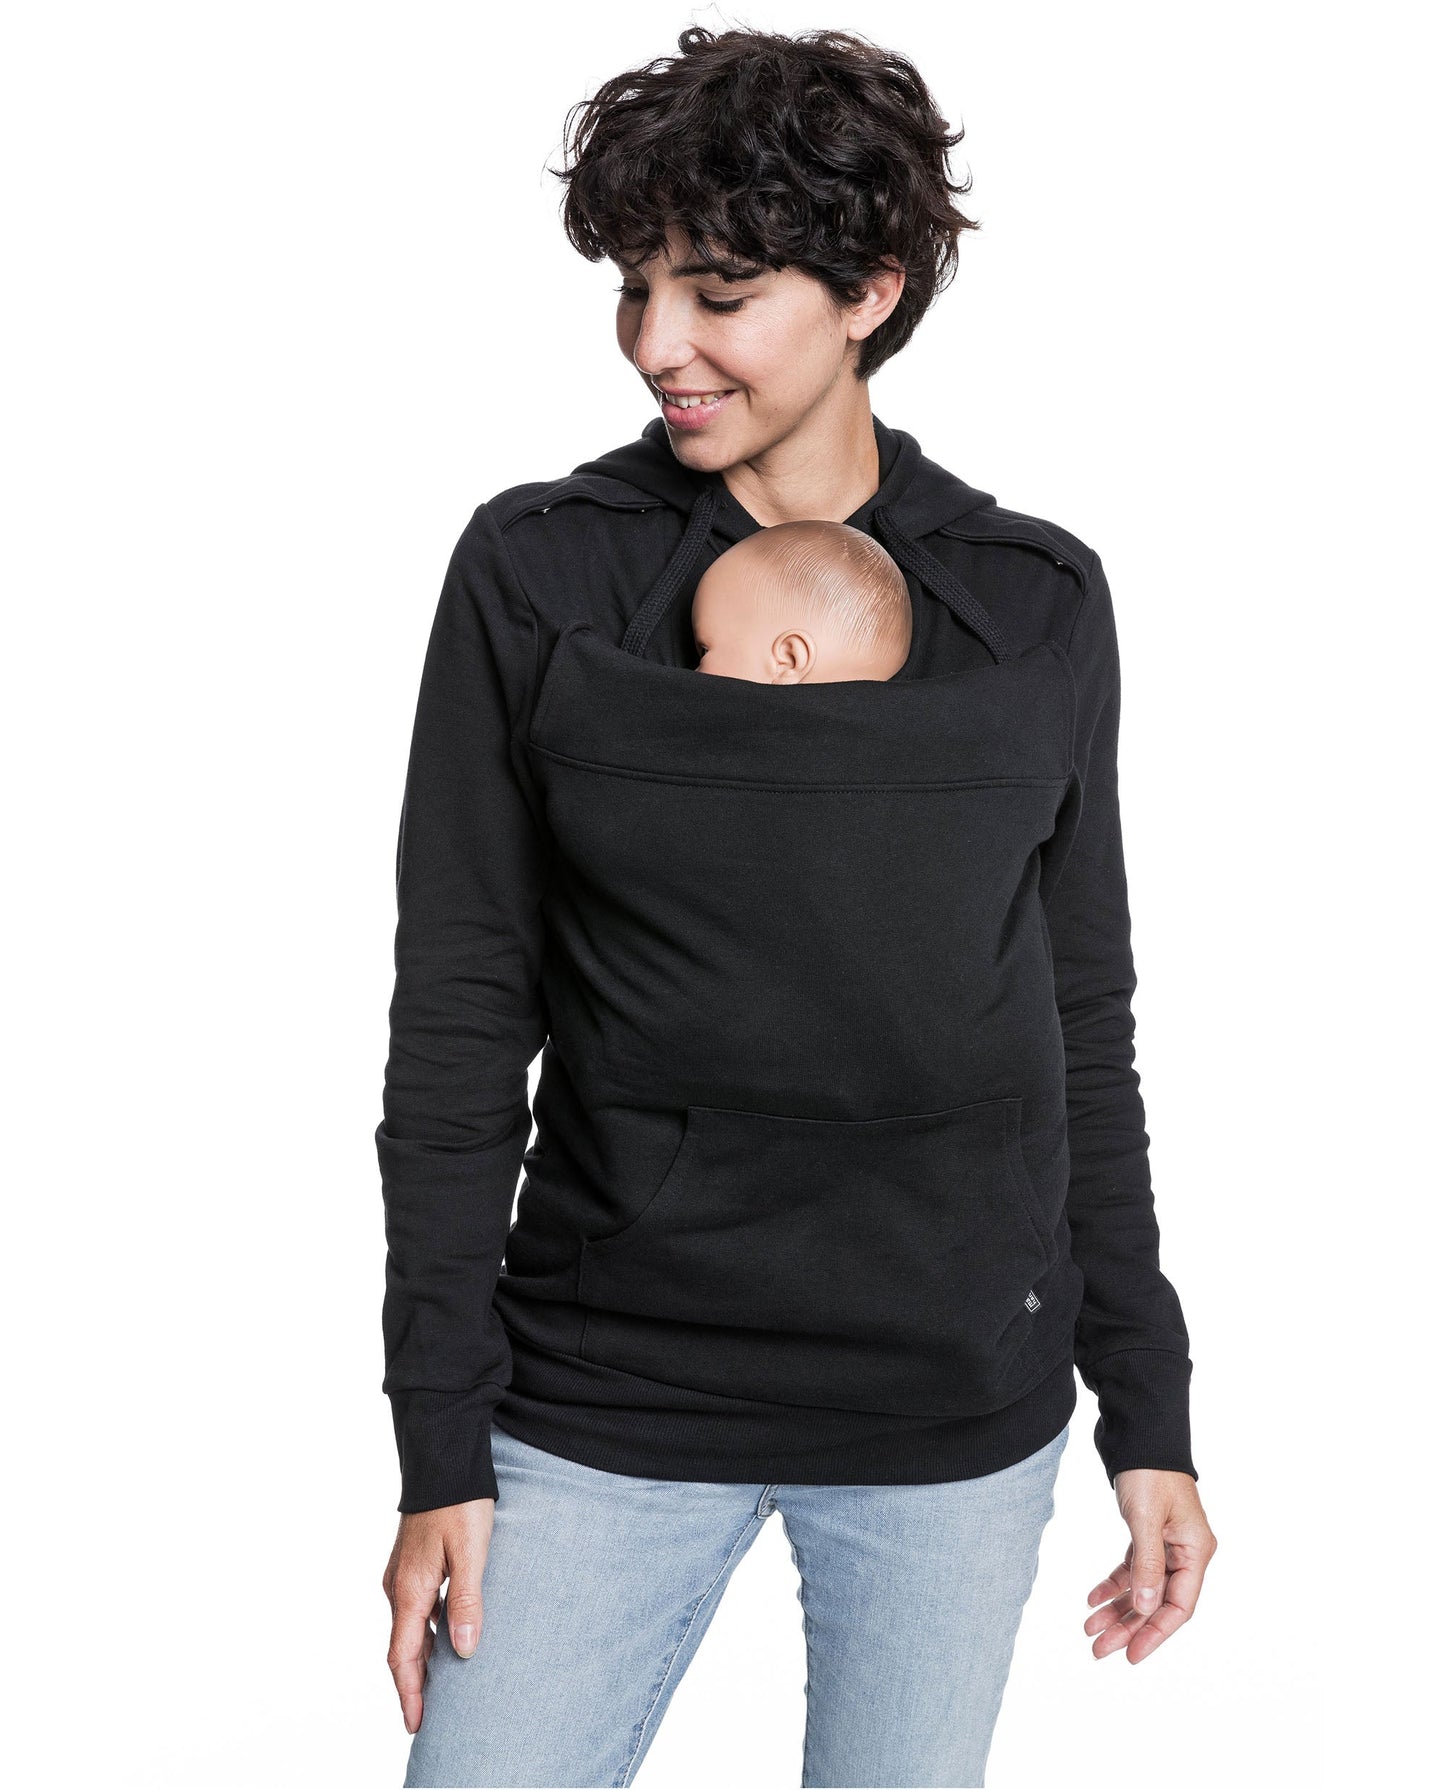 Baby carrier sweatshirt | Mama Plays | Black Carriers Mama Hangs 